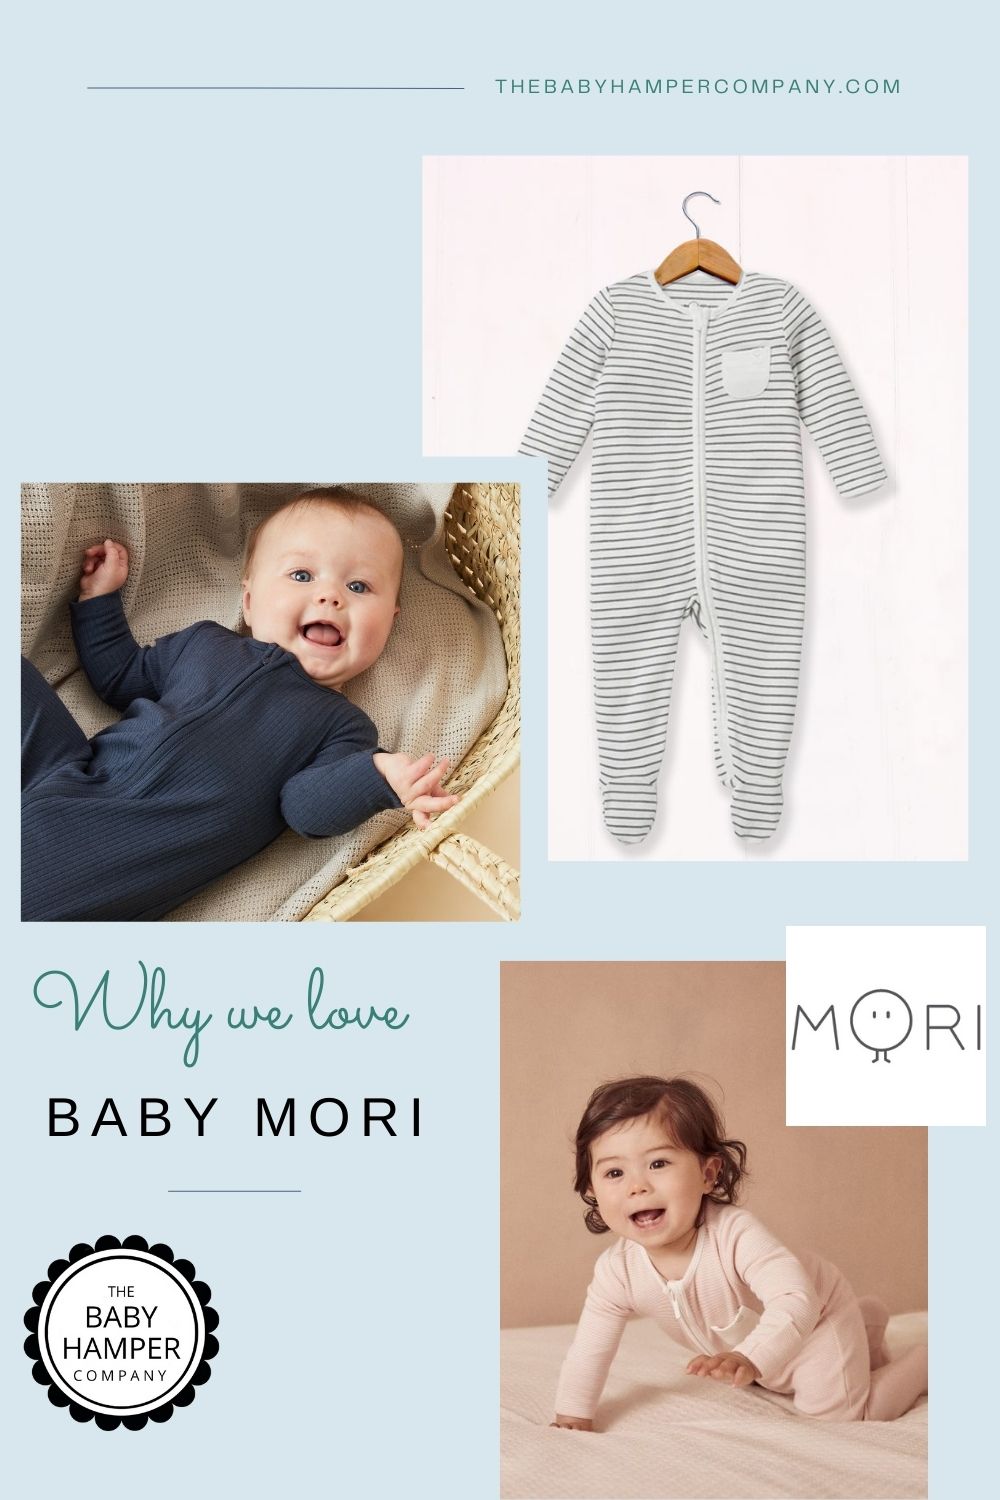 Why we love Baby Mori at The Baby Hamper Company